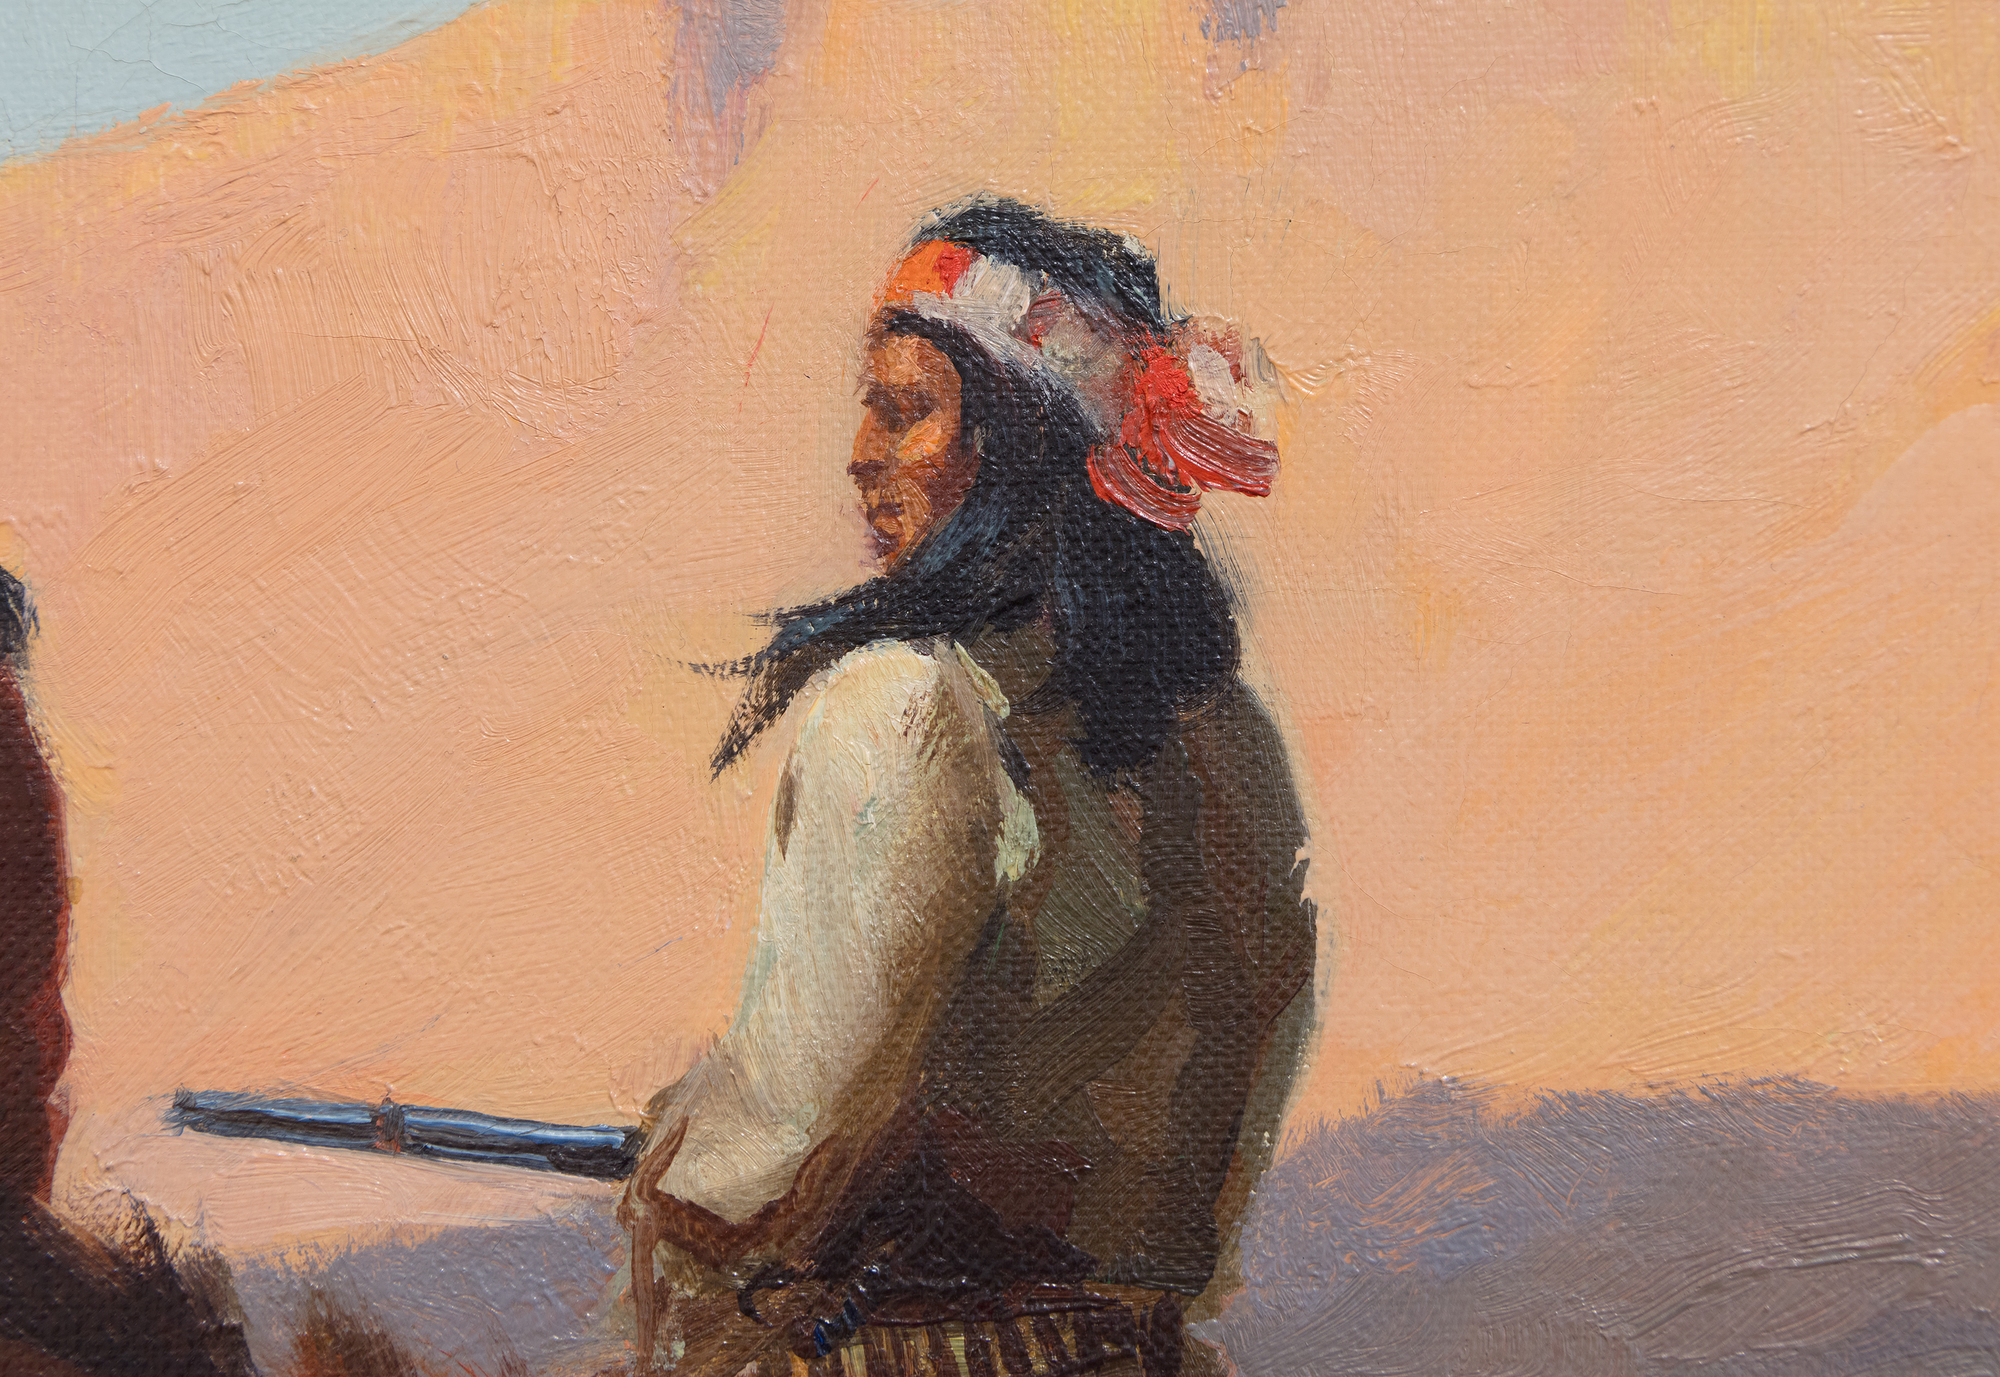 OLAF WIEGHORST - Apaches - oil on canvas - 20 x 24 in.